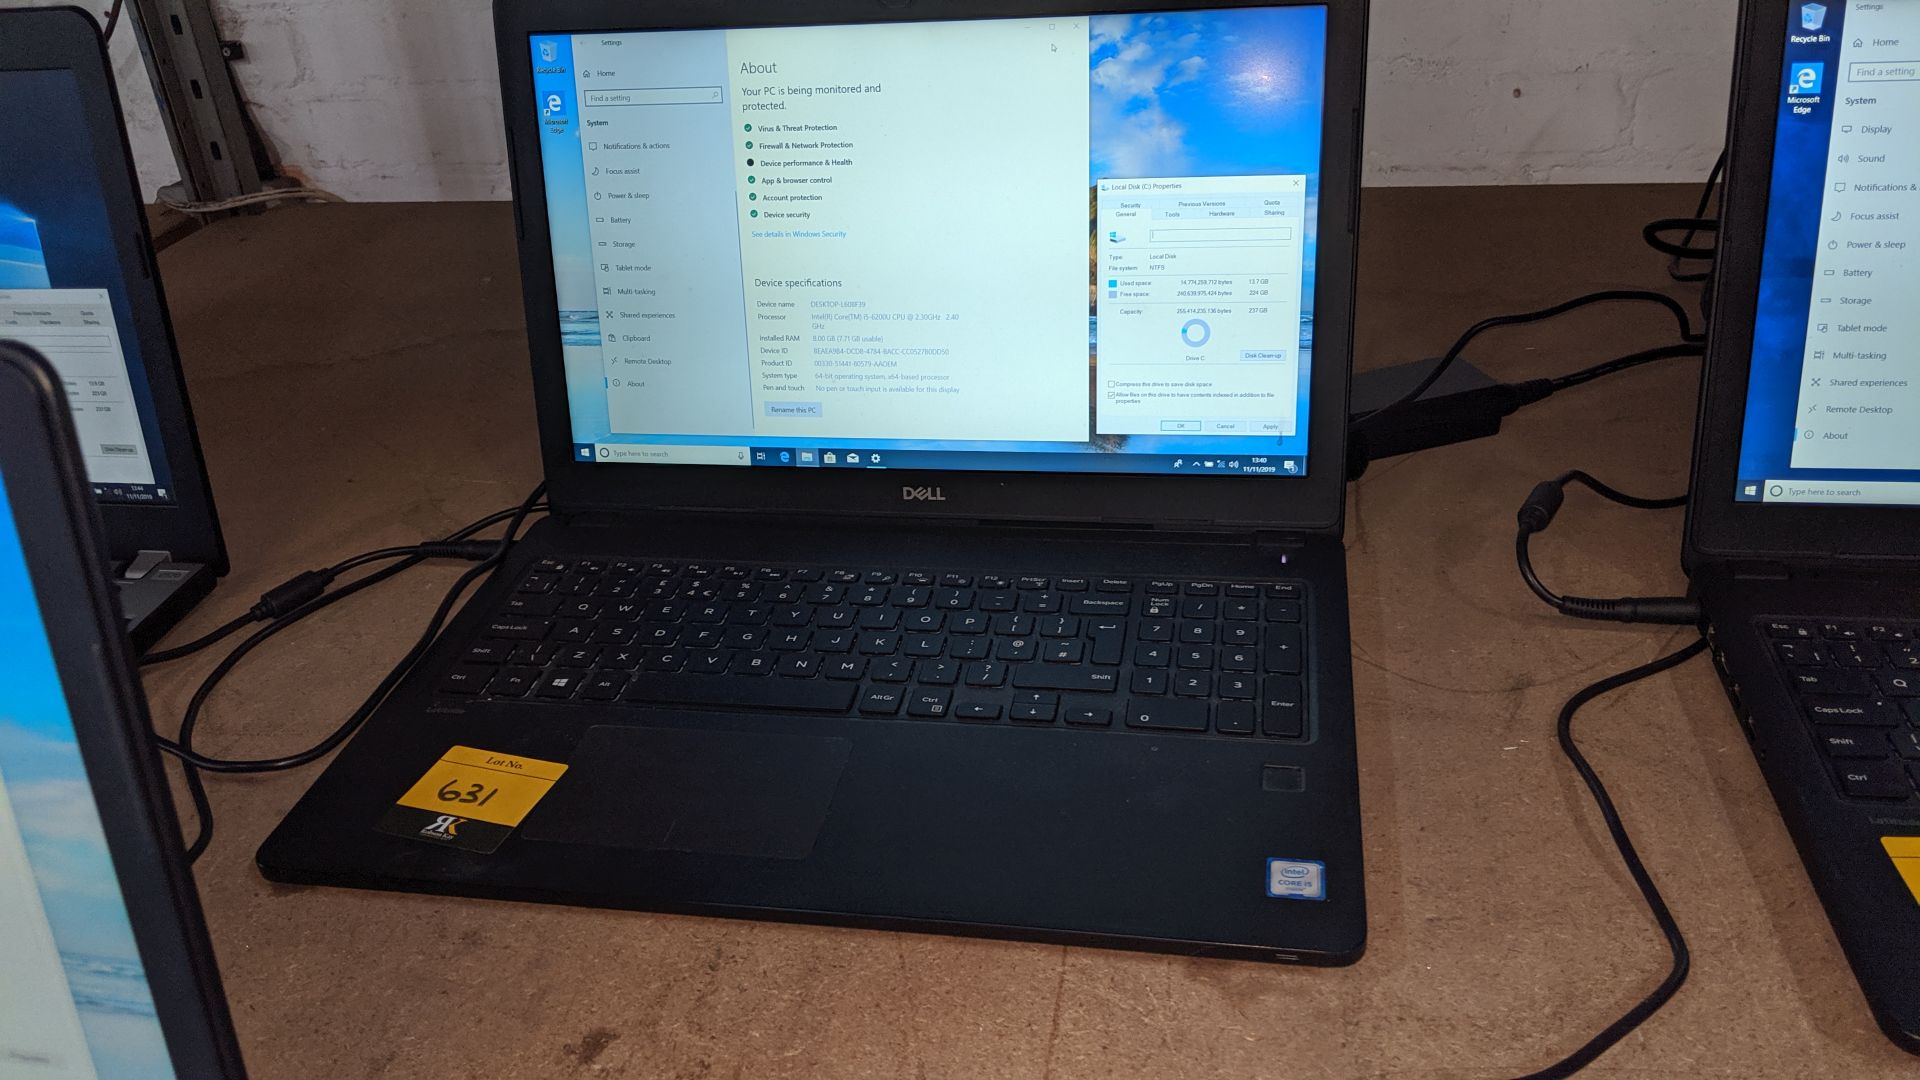 Dell Latitude notebook computer, Intel Core i5-6200u CPU @ 2.3GHz, 8Gb RAM, 256Gb SSD, including